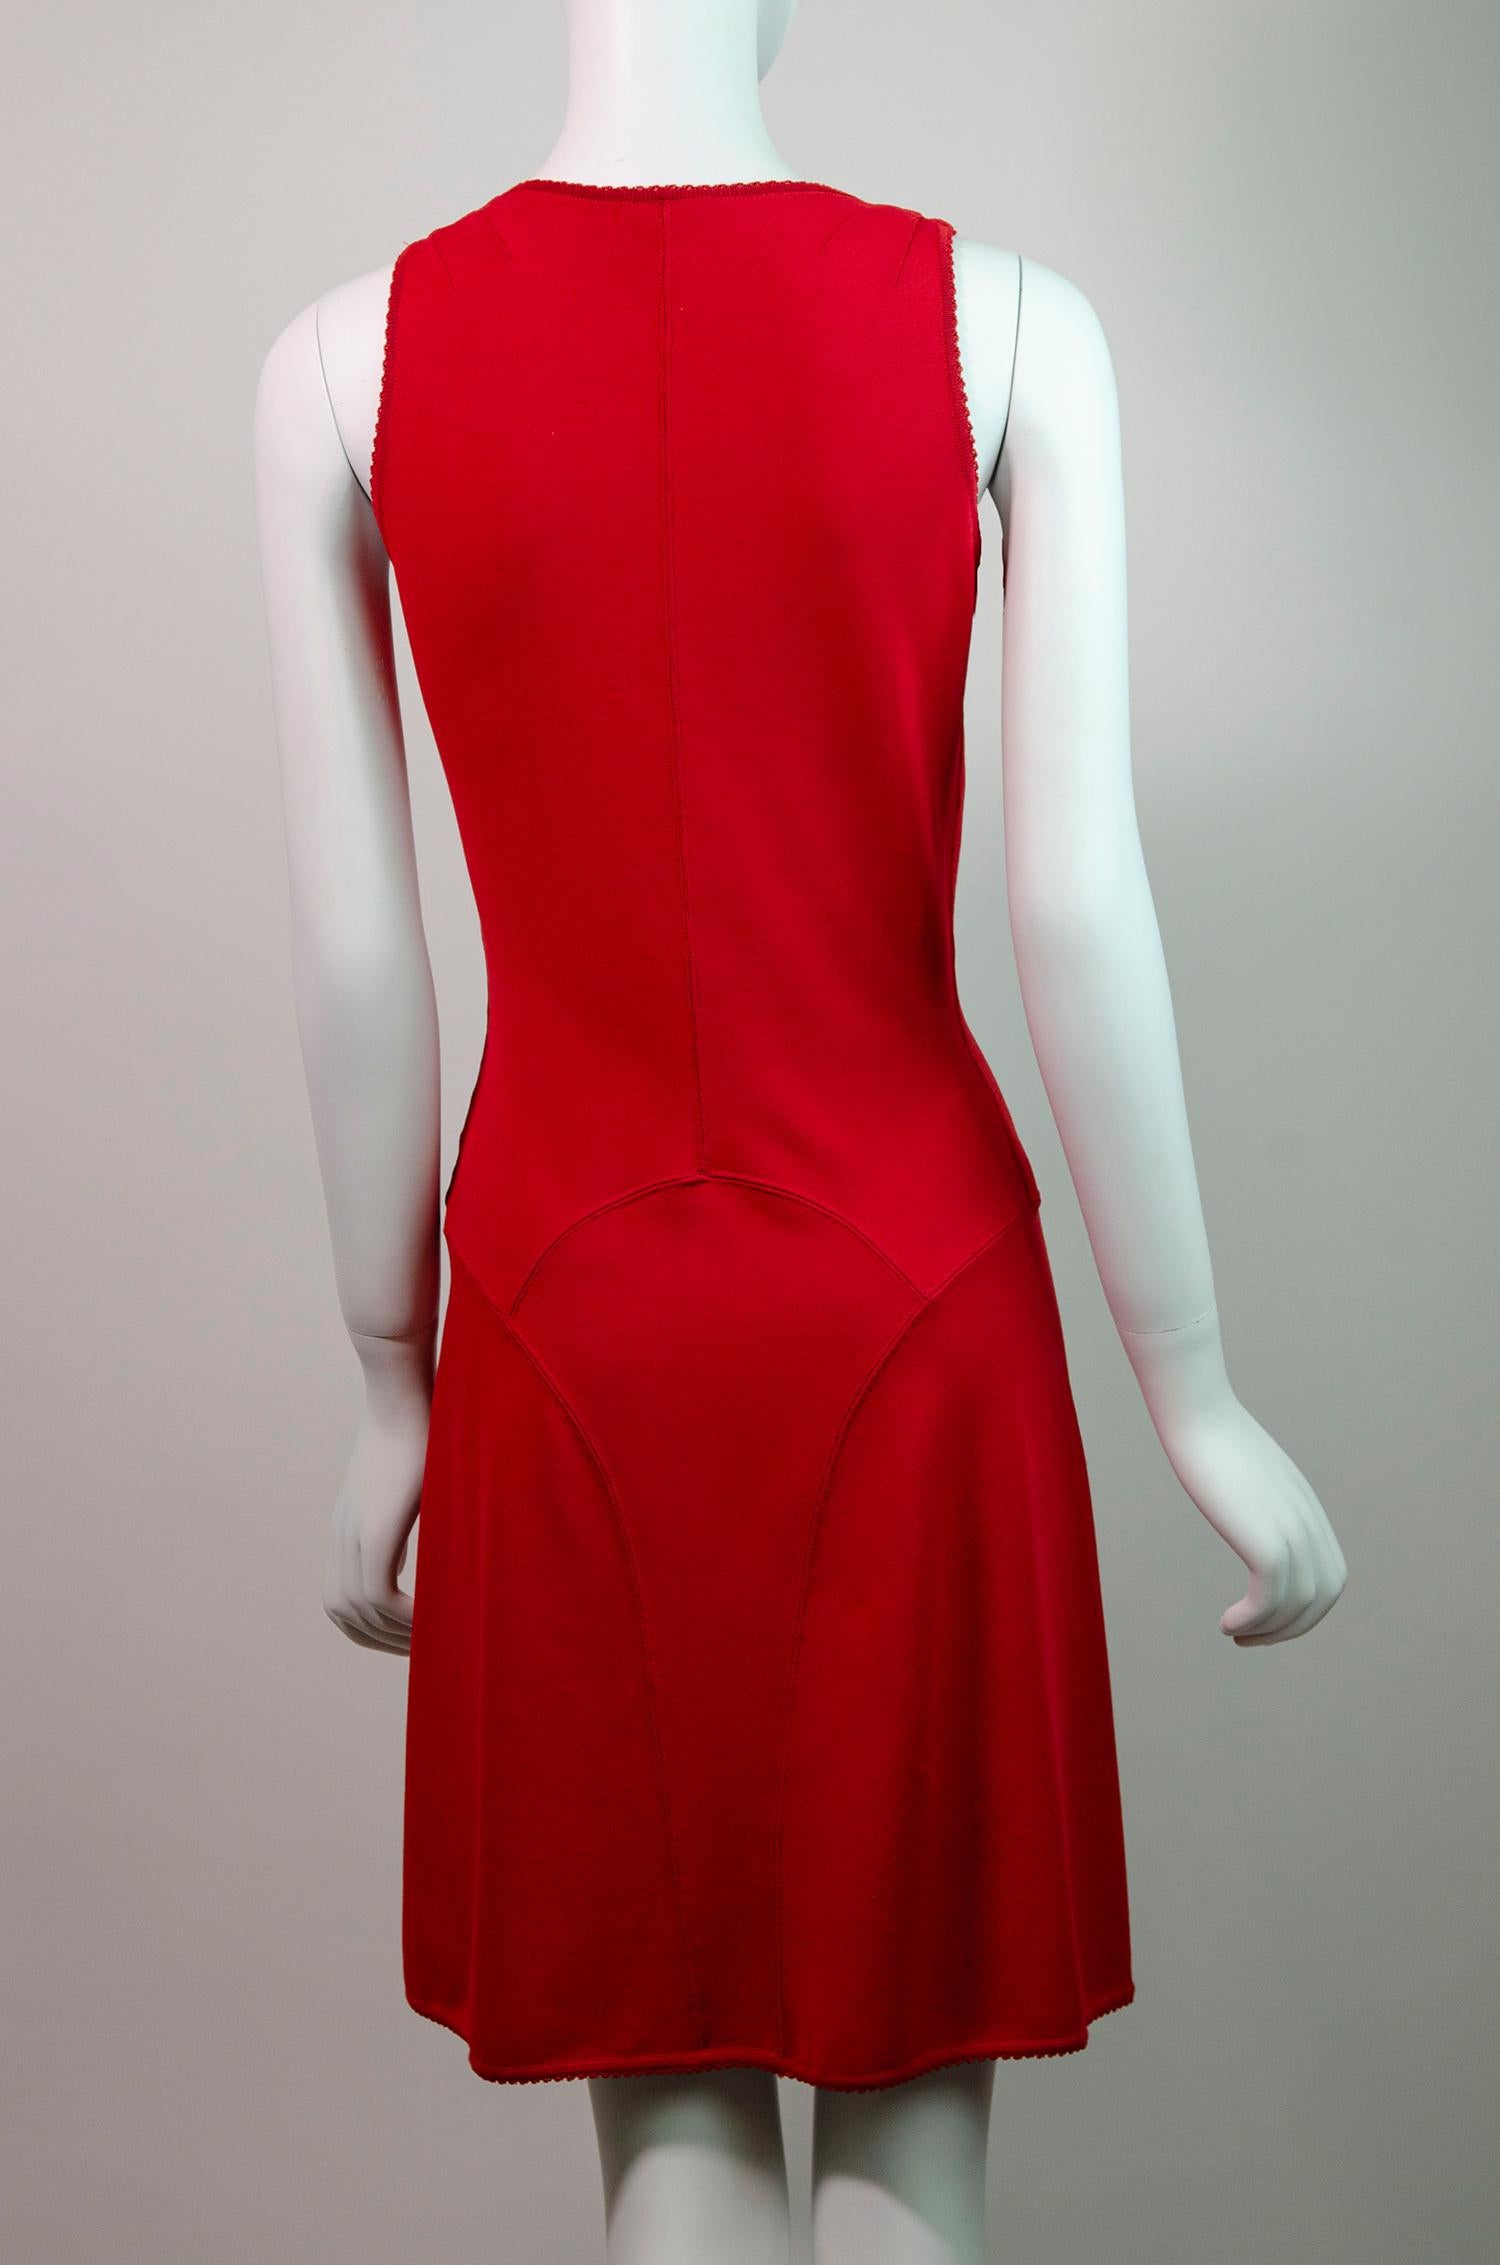 ALAÏA Classic Vintage 1990s Red Bodycon Clueless style Mini Dress 1